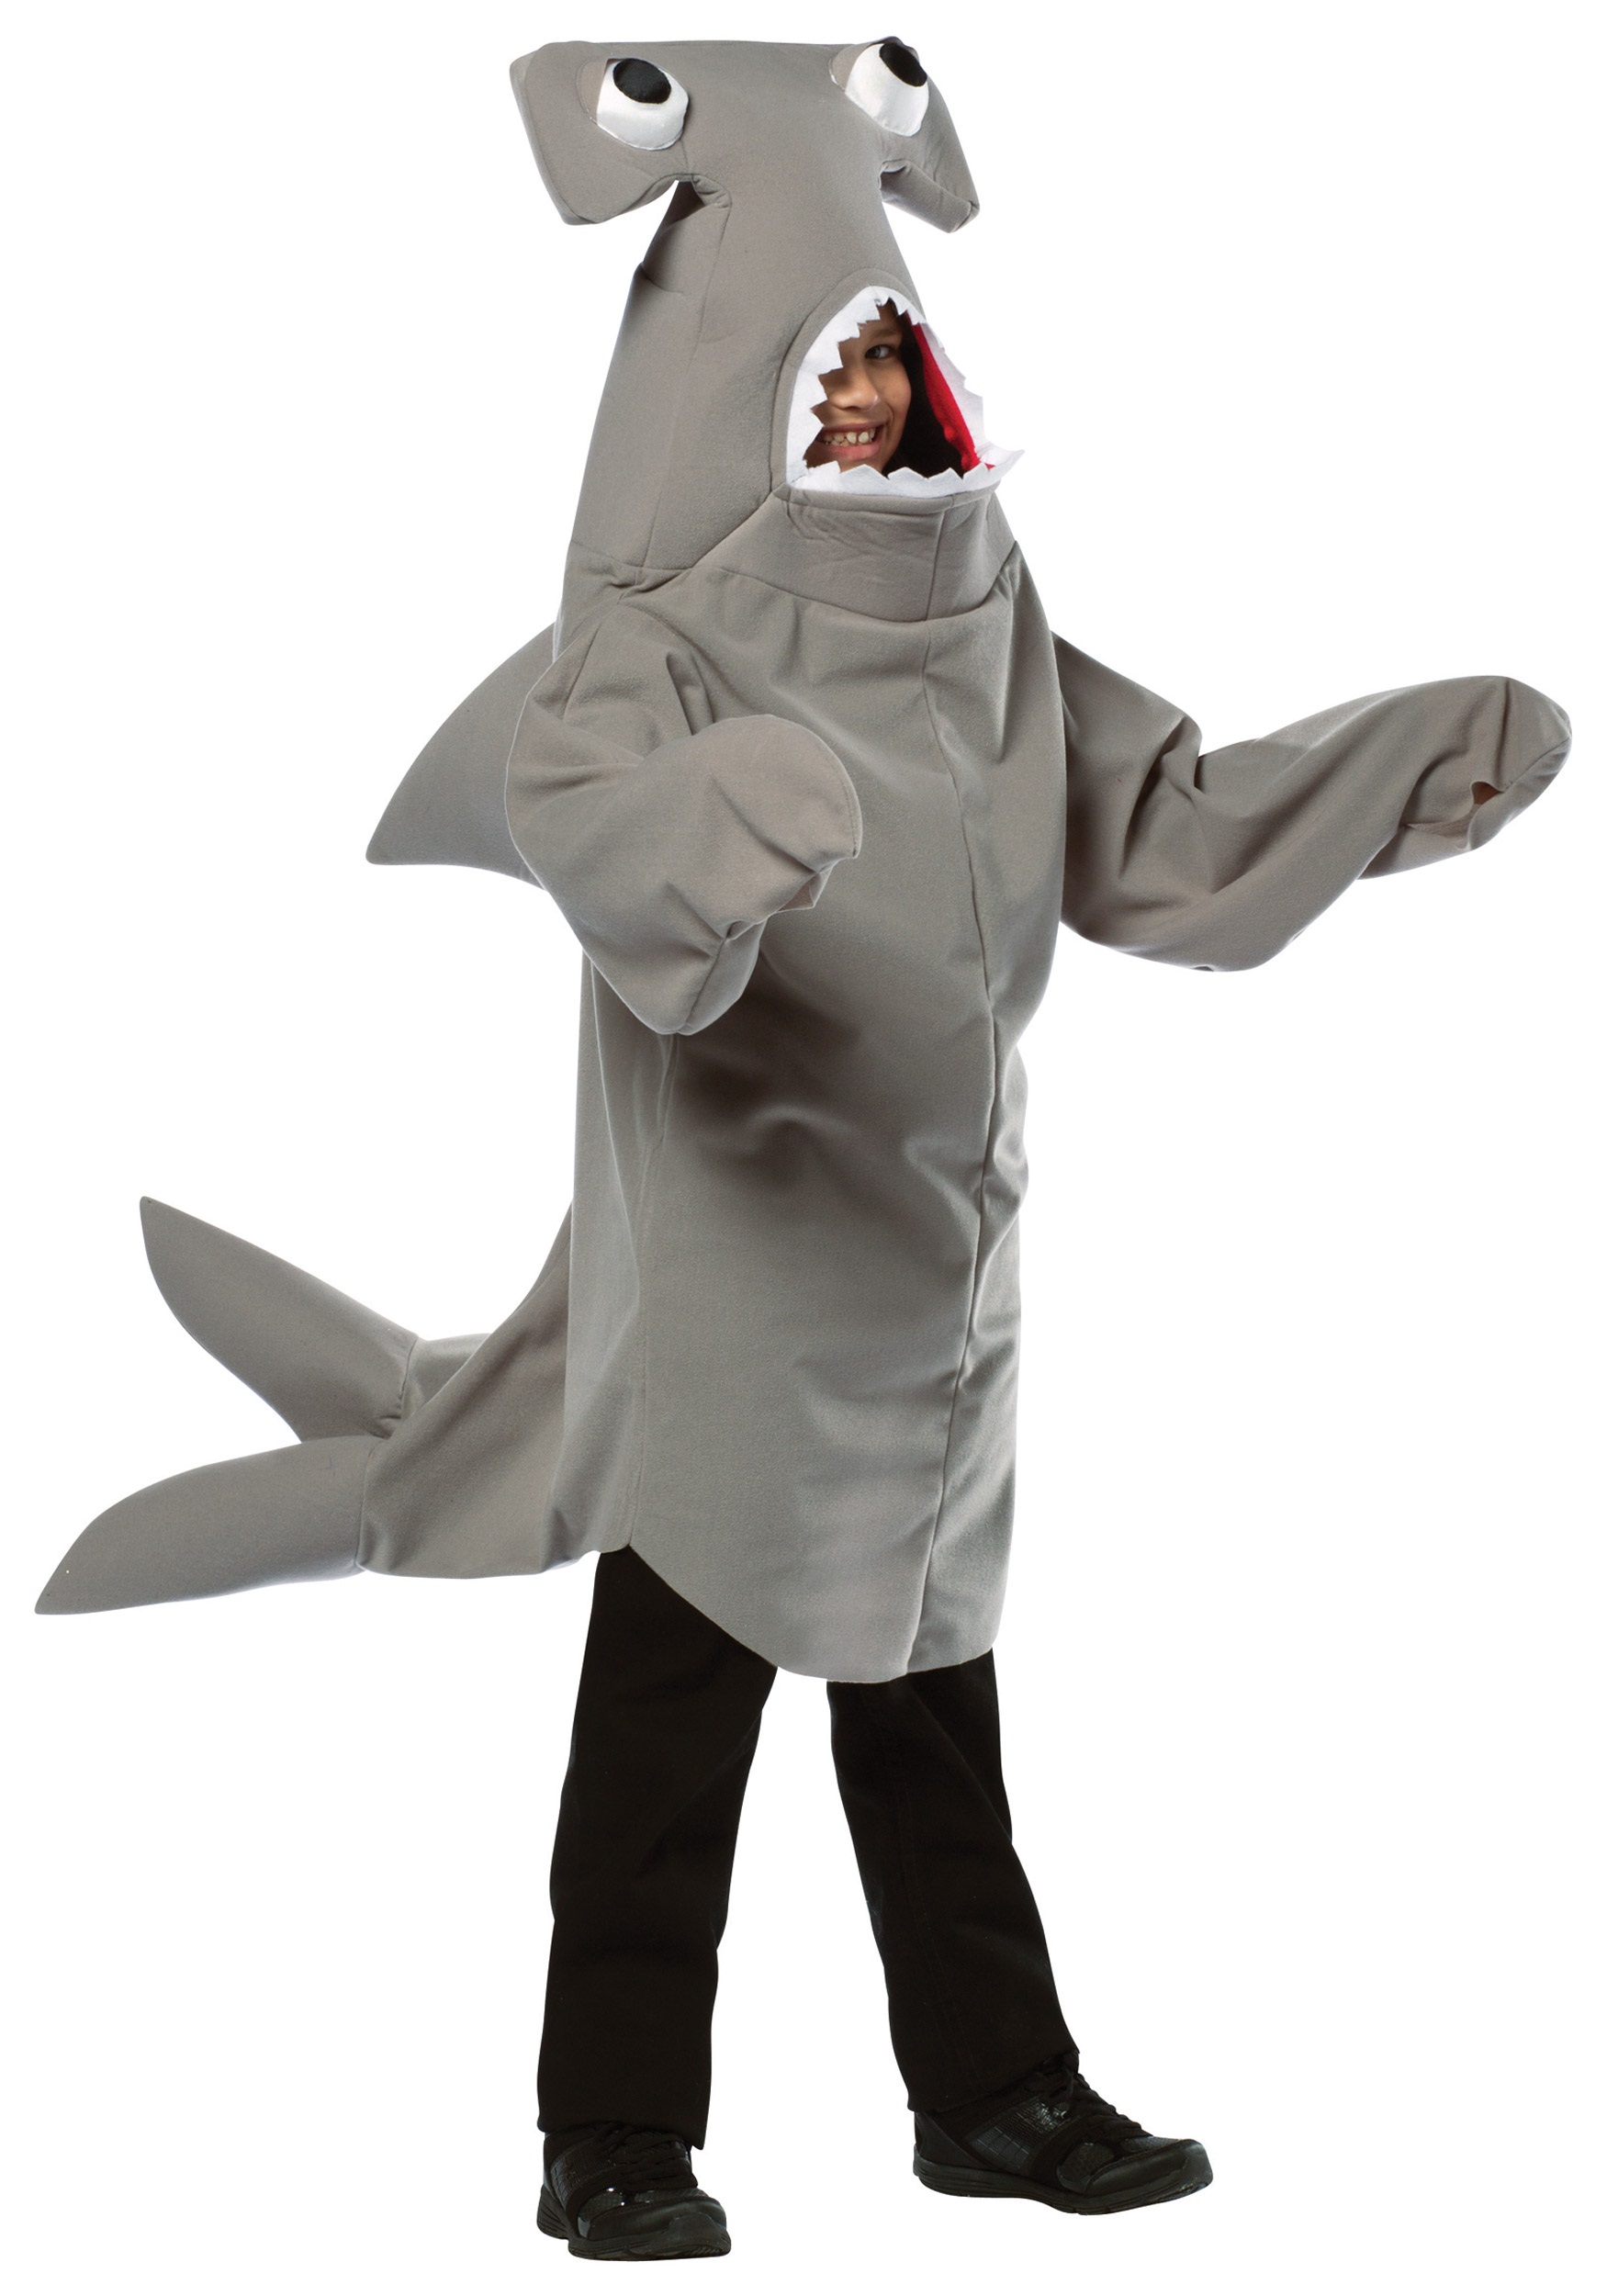 hammerhead-shark-costume.jpg